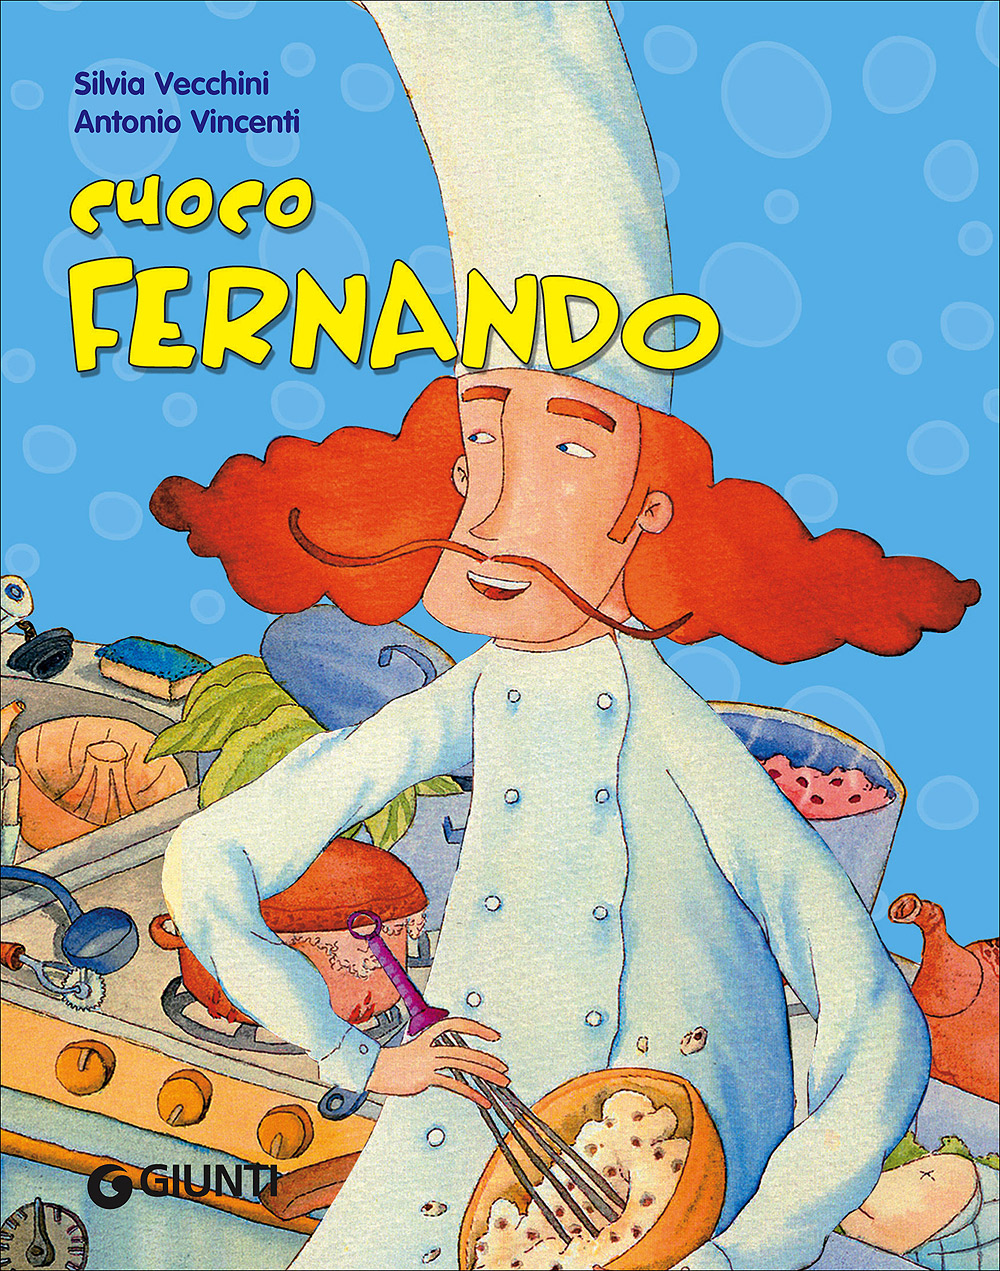 Cuoco Fernando